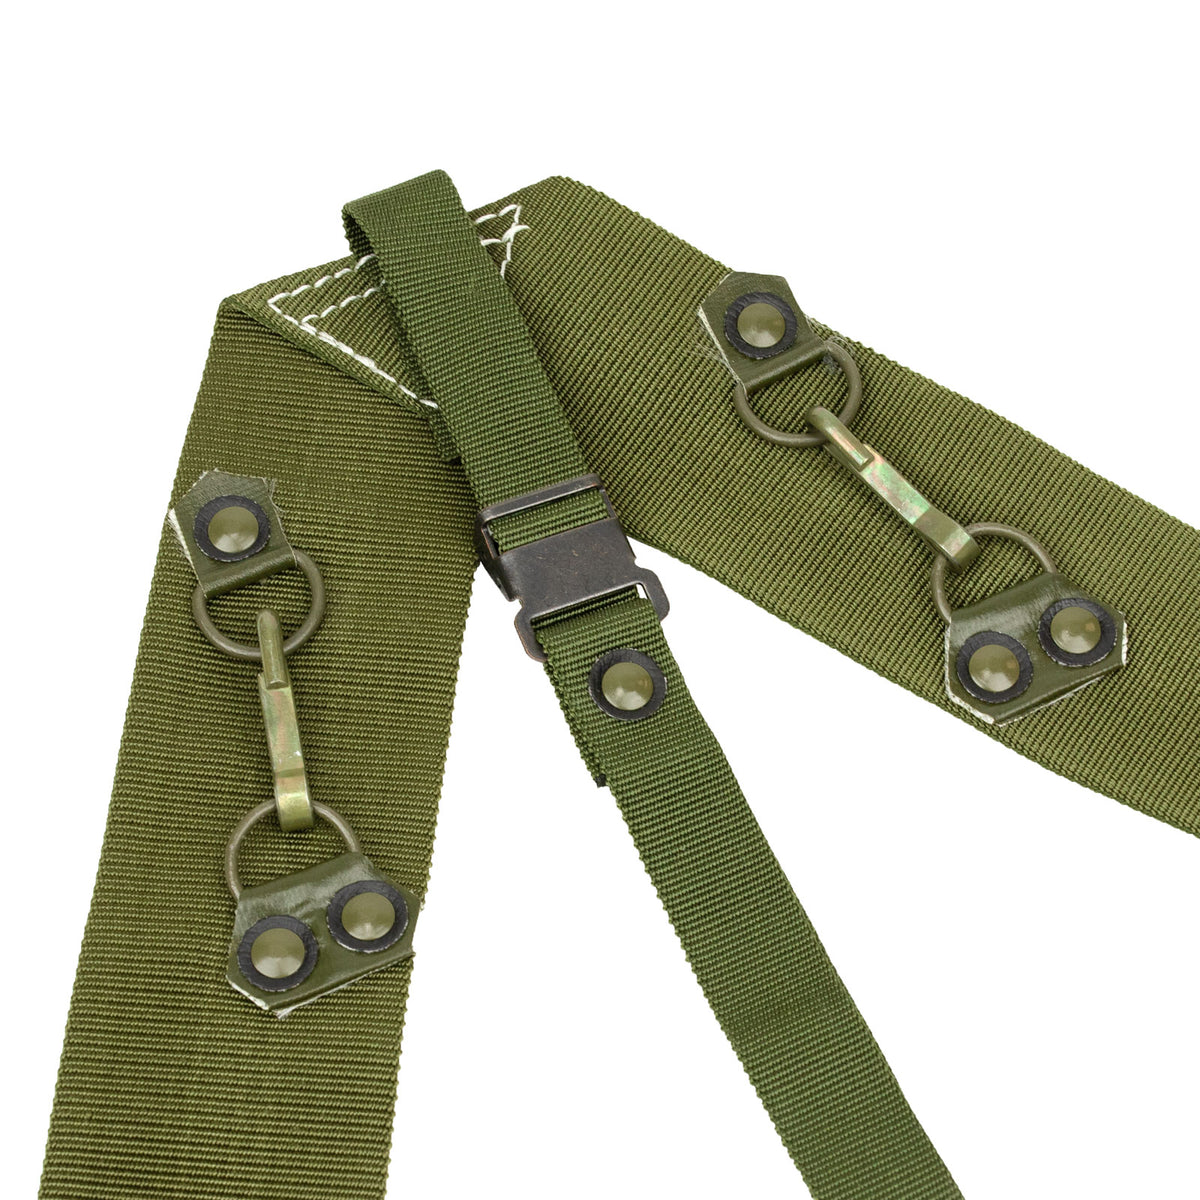 Czech vz85 Shoulder Harness | Y-Strap Suspenders